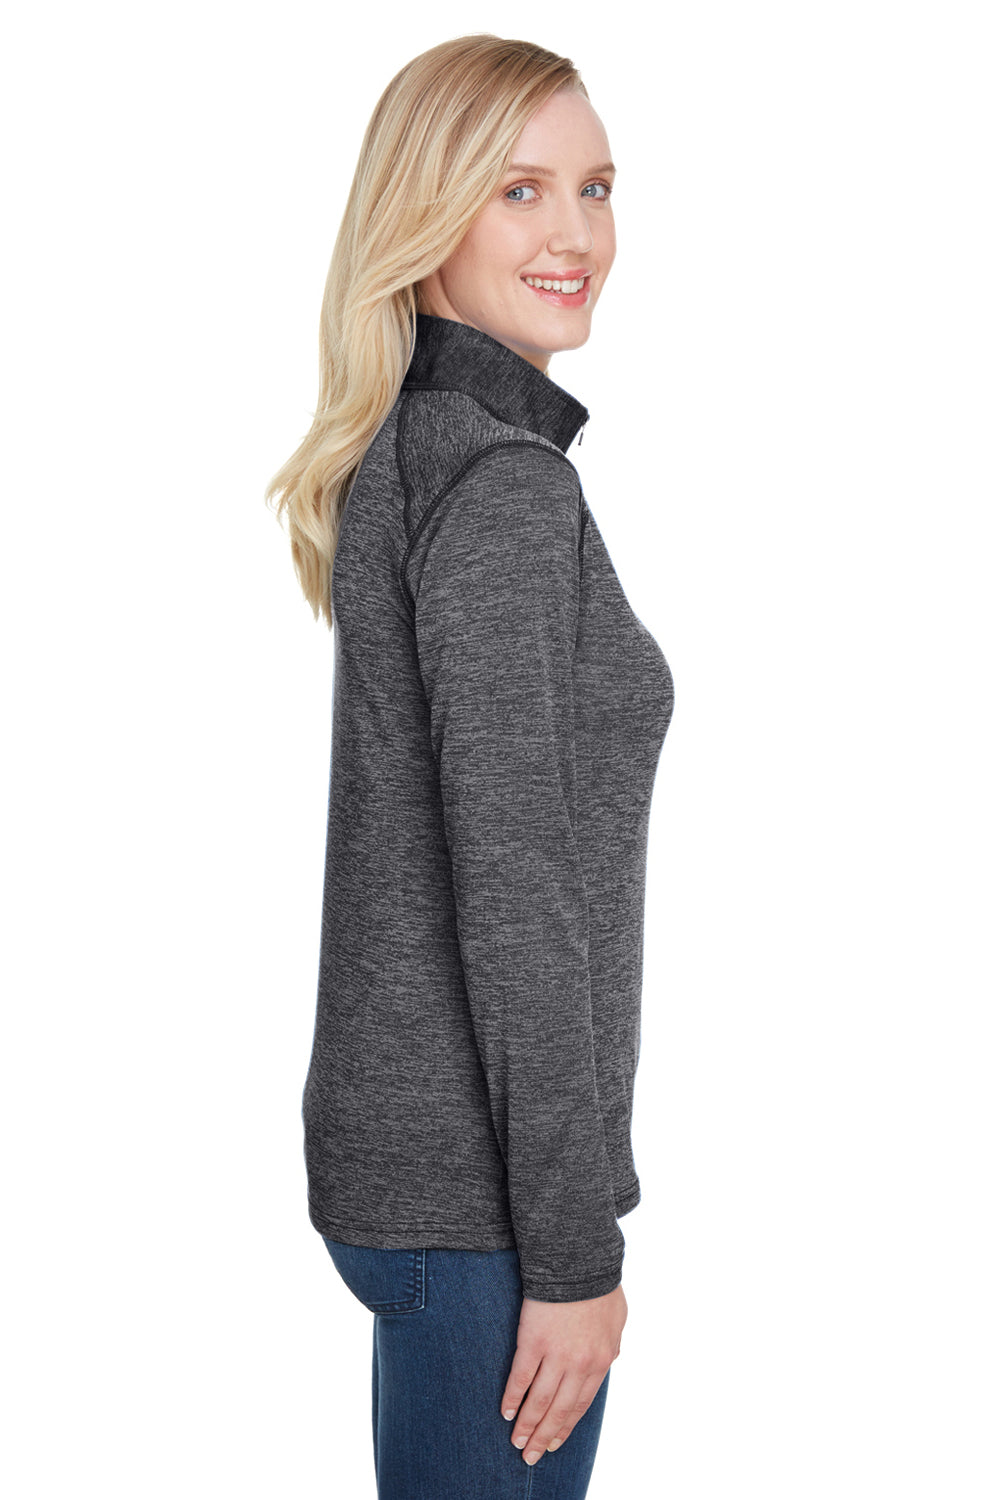 A4 NW4010 Womens Tonal Space Dye Performance Moisture Wicking 1/4 Zip Sweatshirt Charcoal Grey Side